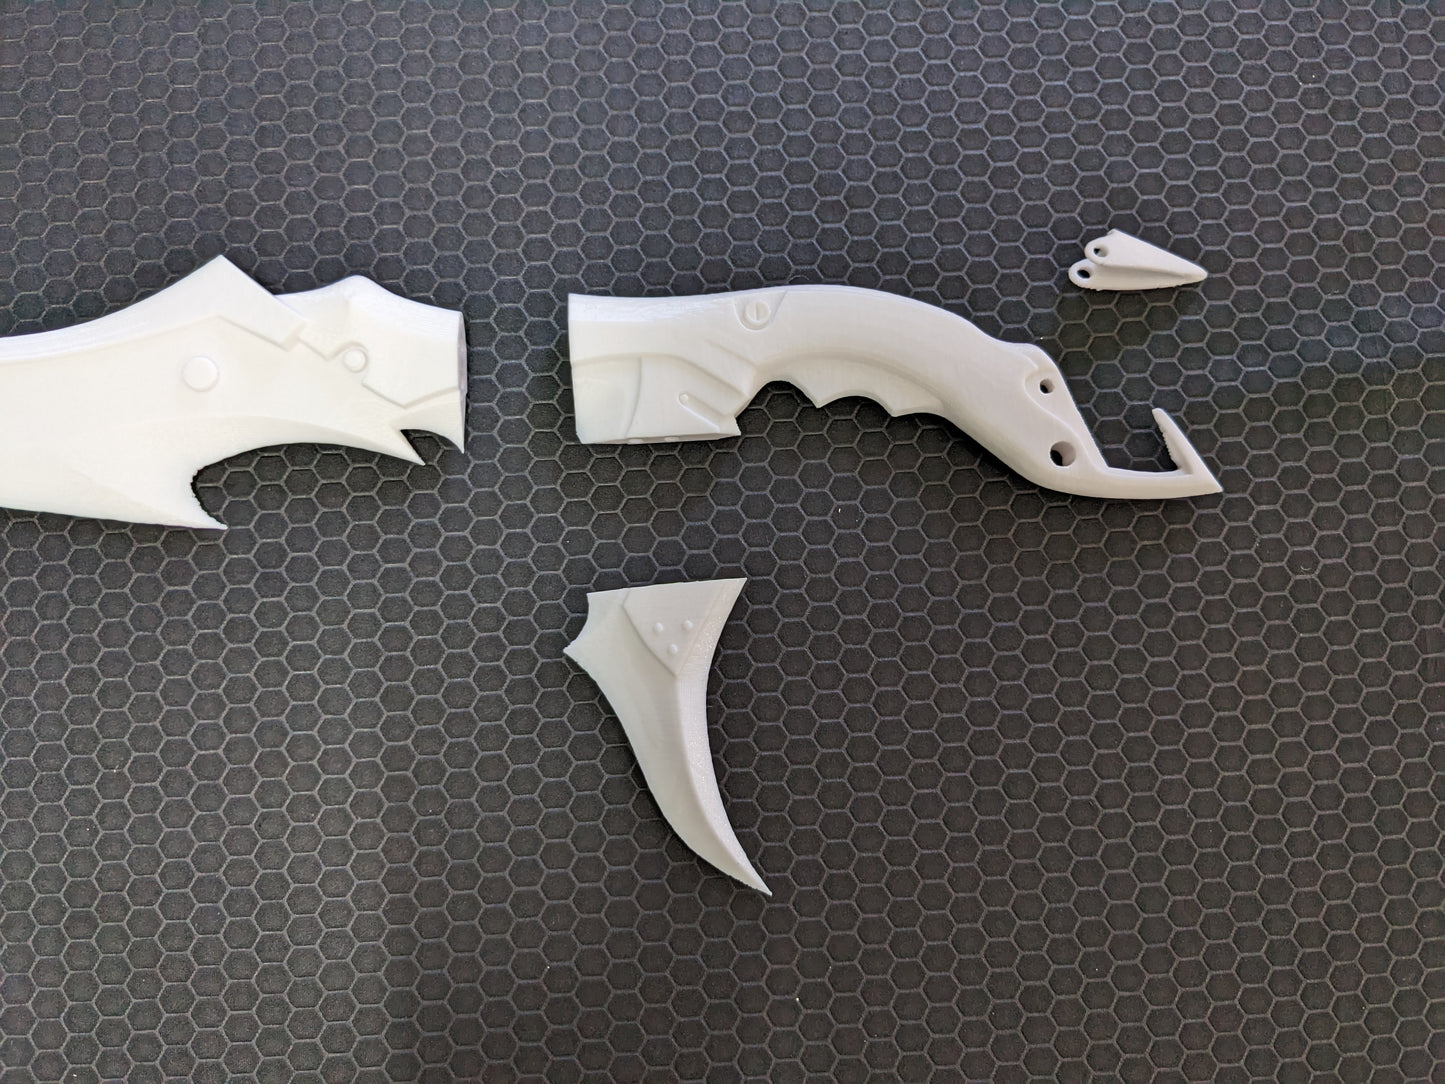 Sampo Dagger - Digital 3D Model Files and Physical 3D Printed Kit Options - Honkai: Star Rail Cosplay - Sampo Cosplay